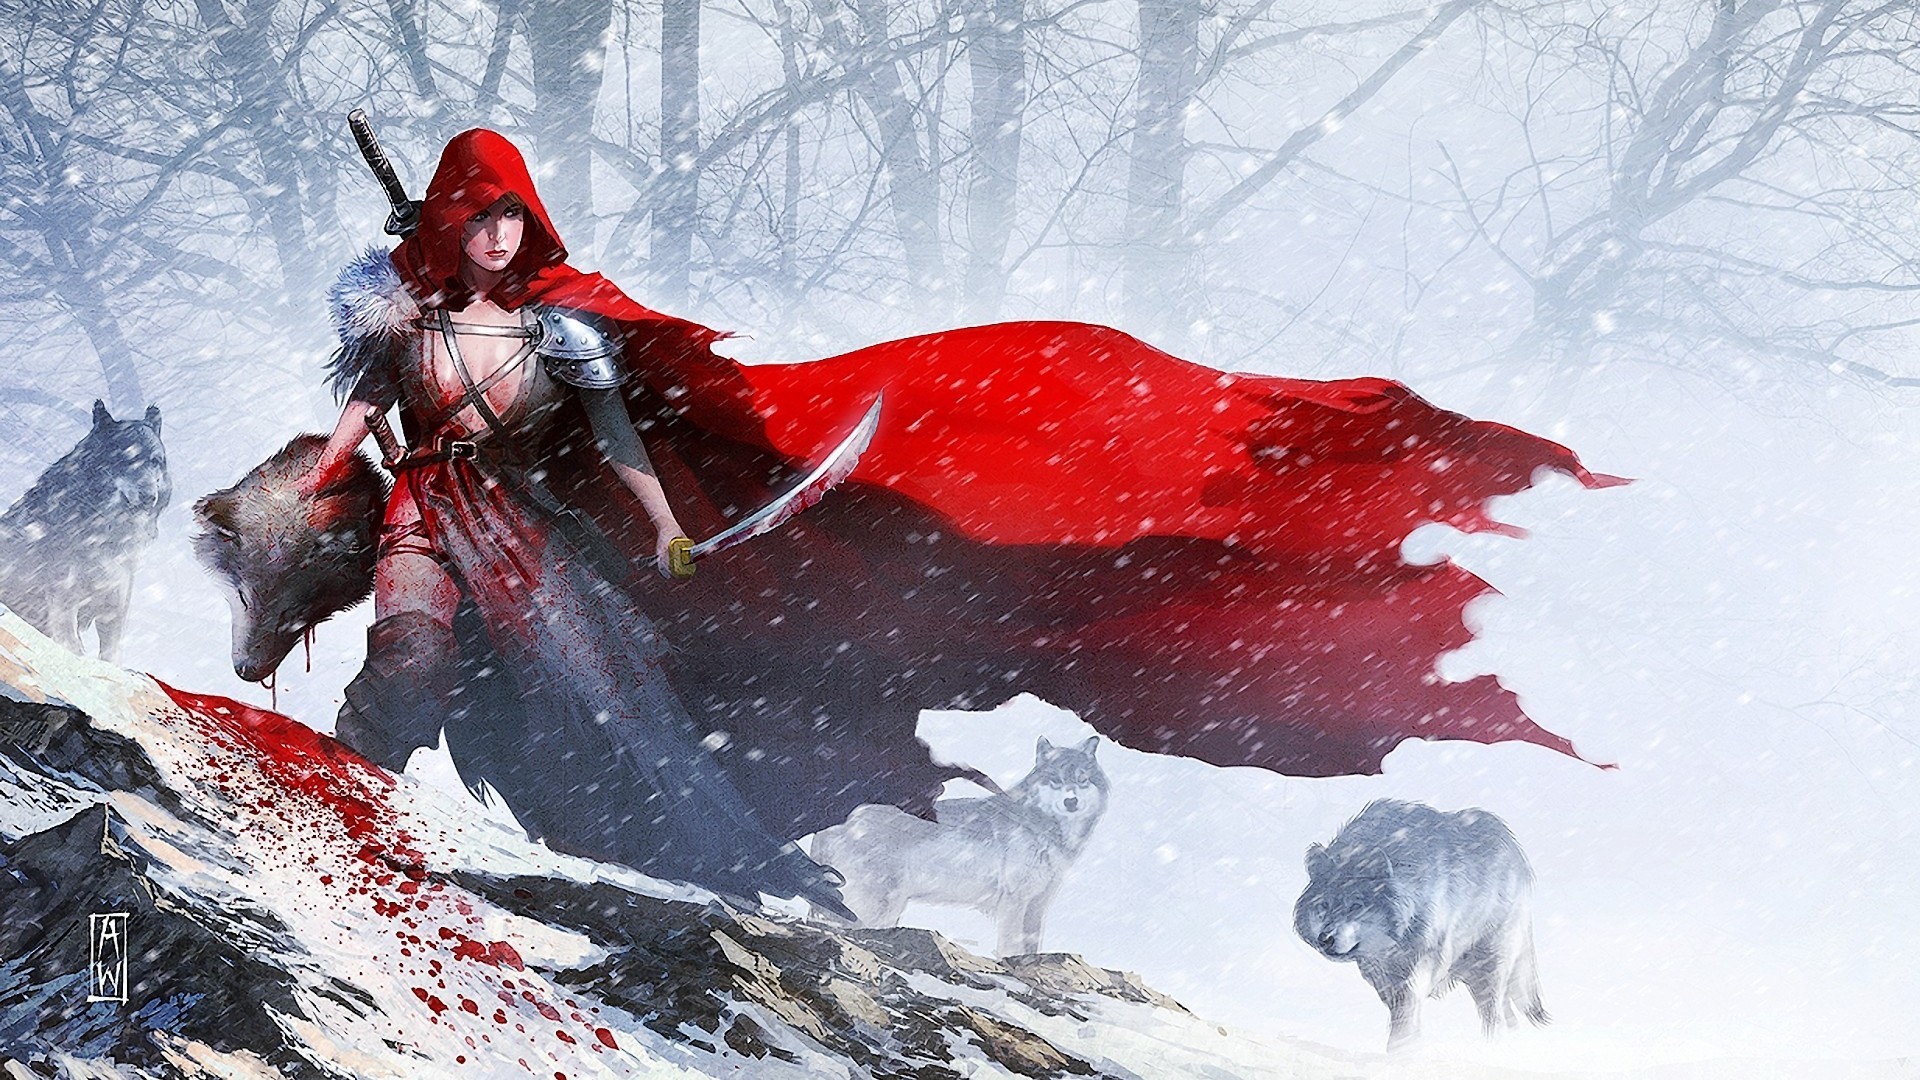 General 1920x1080 Little Red Riding Hood fairy tale blood wolf hoods fantasy girl snow fantasy art